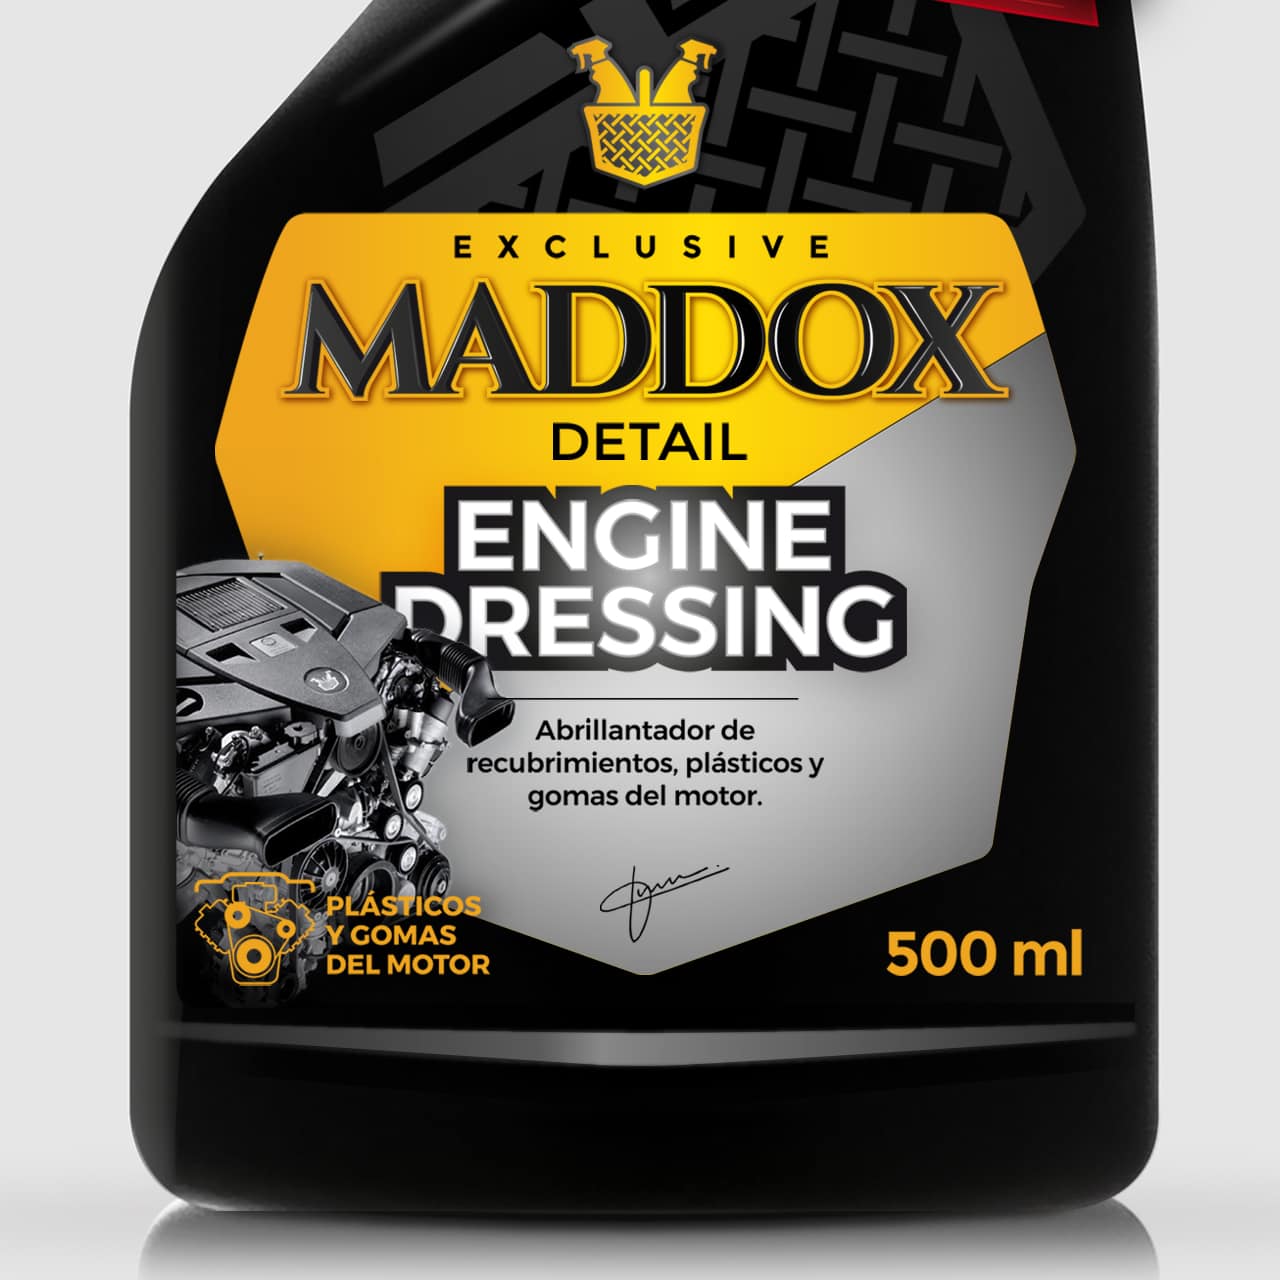 Maddox Detail - Engine Dressing - Abrillantador de recubrimientos